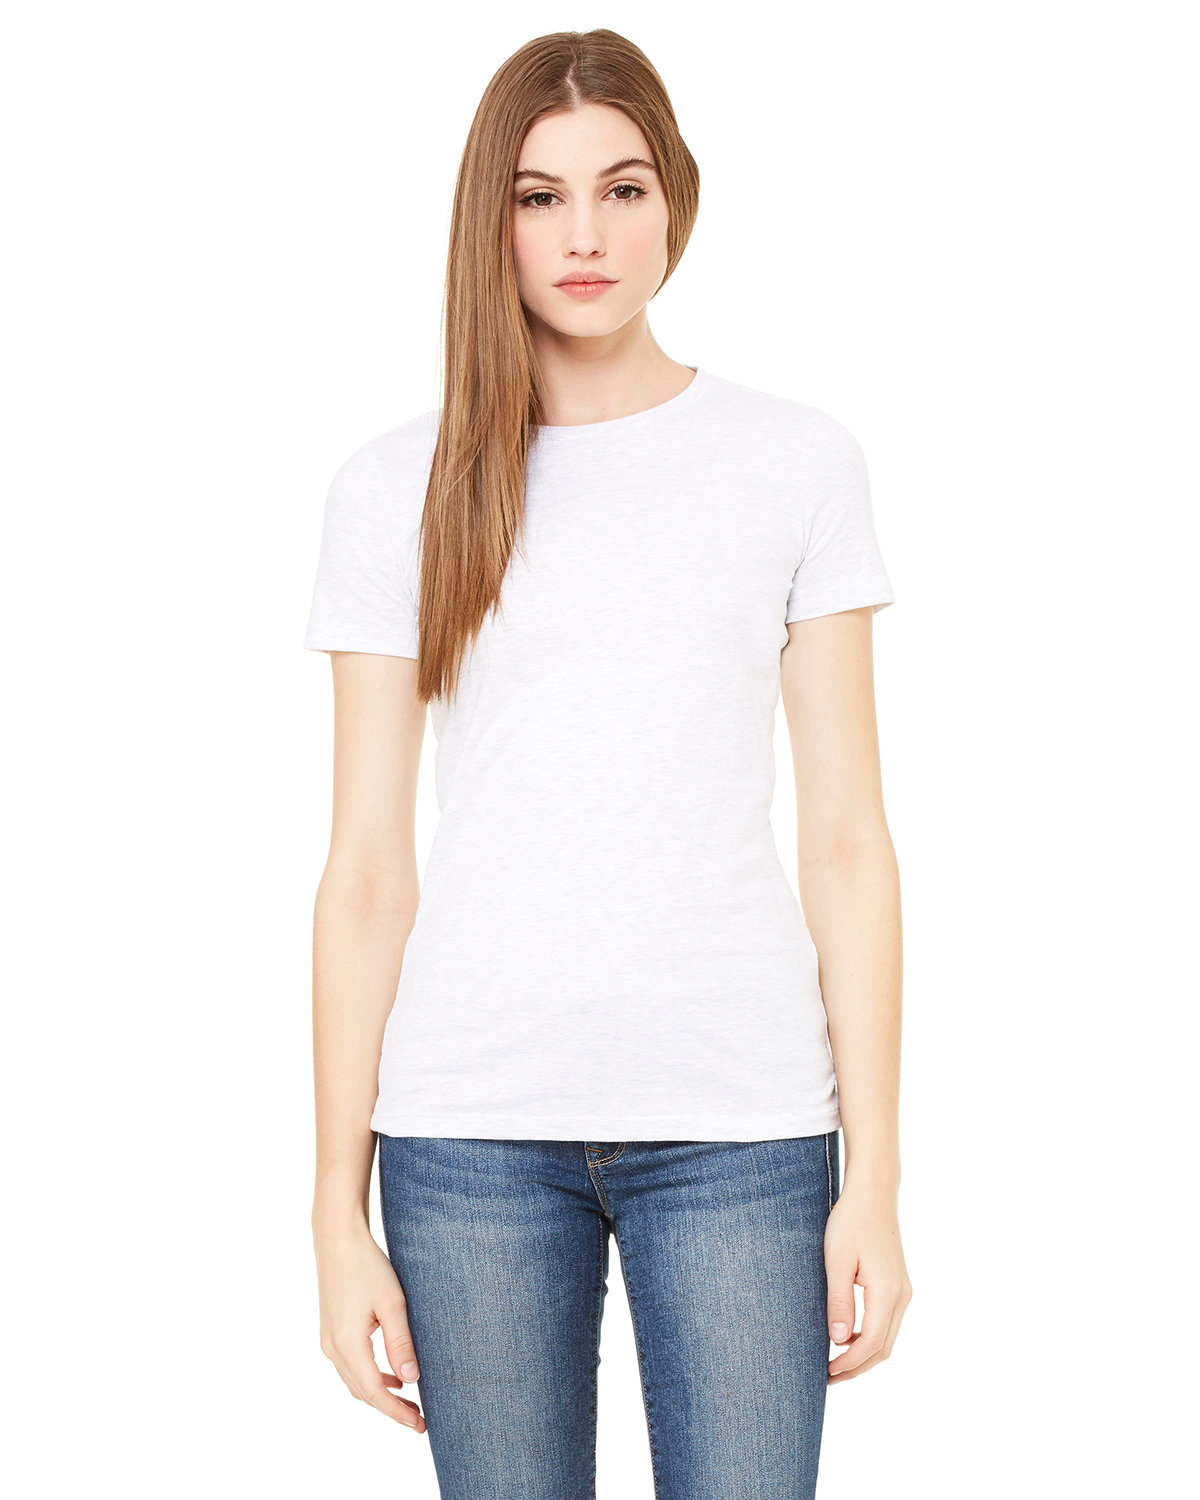 Bella + Canvas Ladies' The Favorite T-Shirt WHITE 